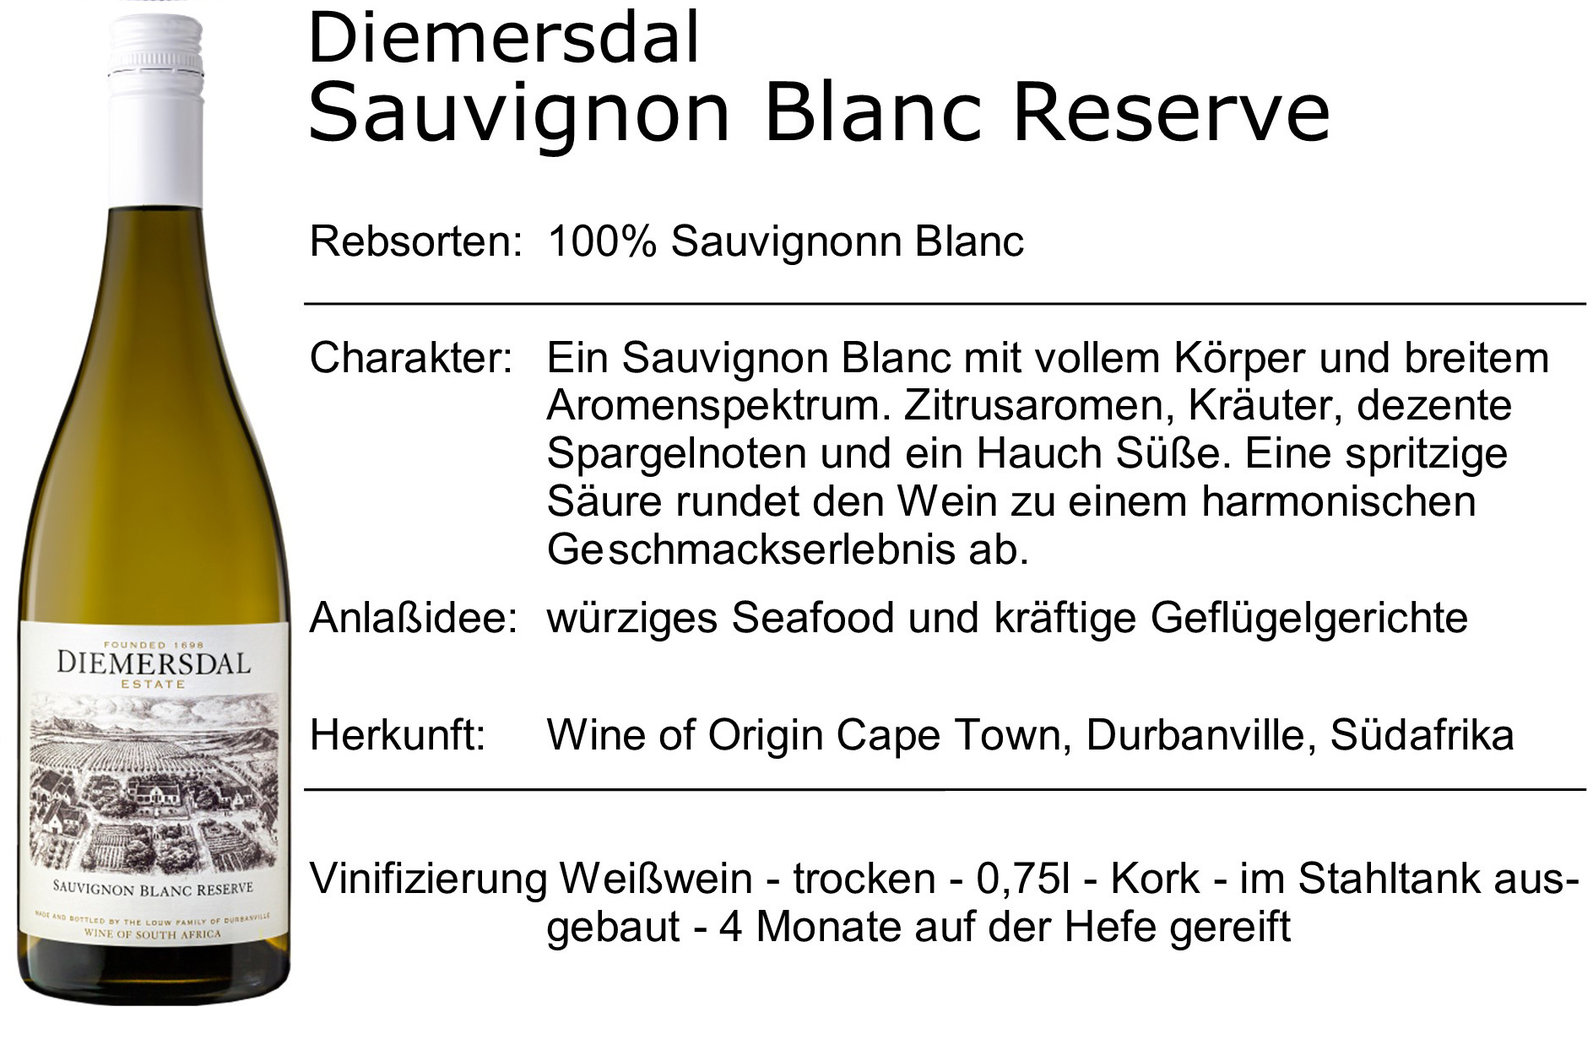 Diemersdal Sauvignon Blanc Reserve 2021